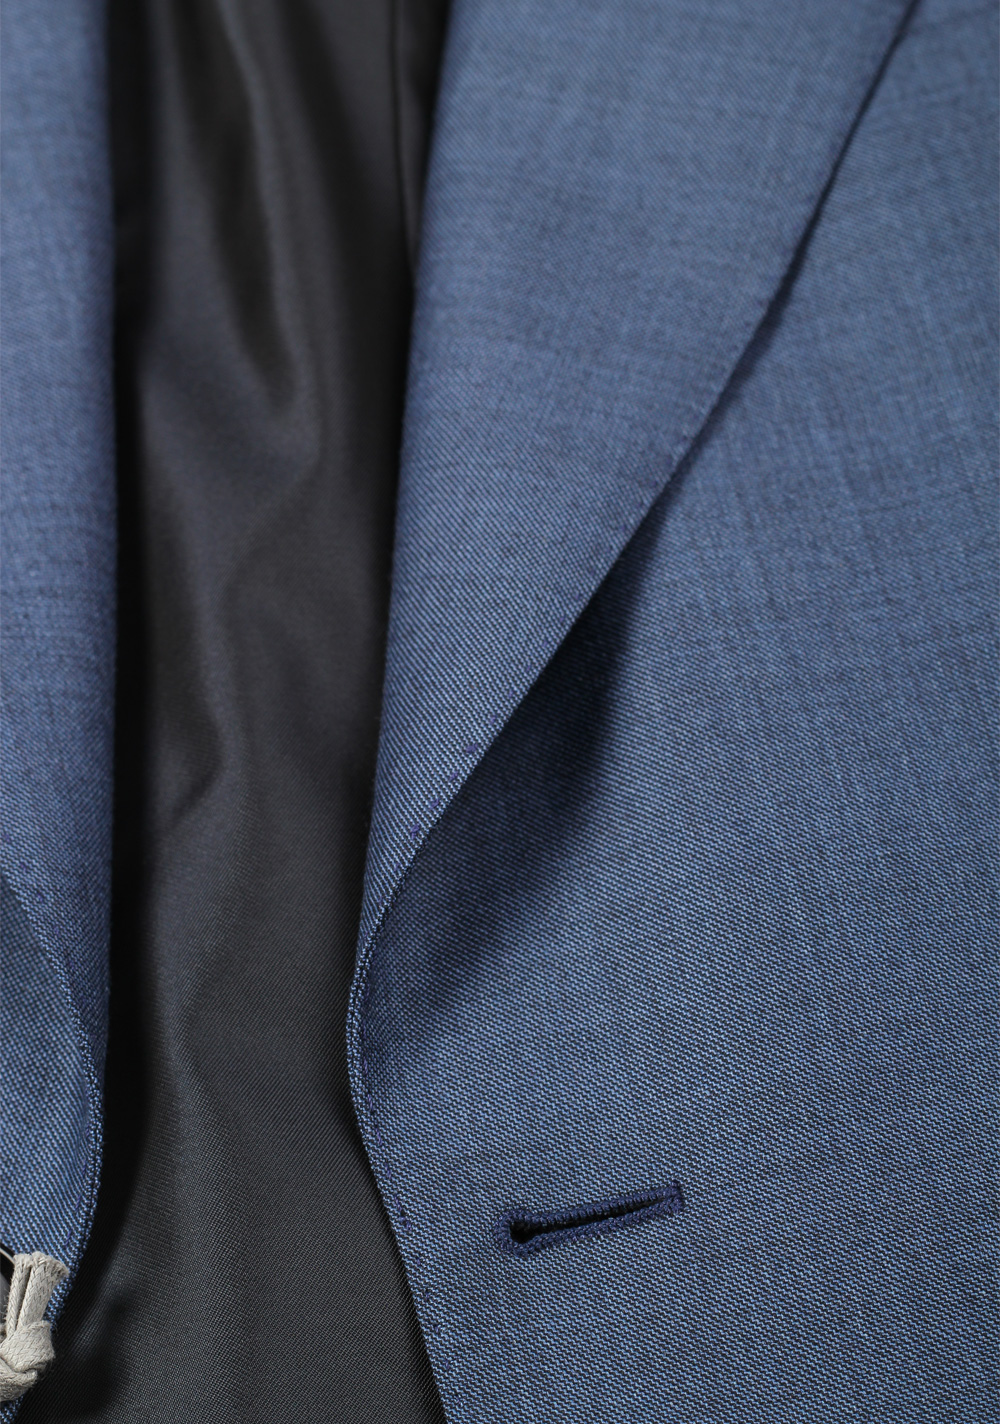 TOM FORD Shelton Solid Blue Sharkskin Suit Size 48 / 38R U.S. In Wool ...